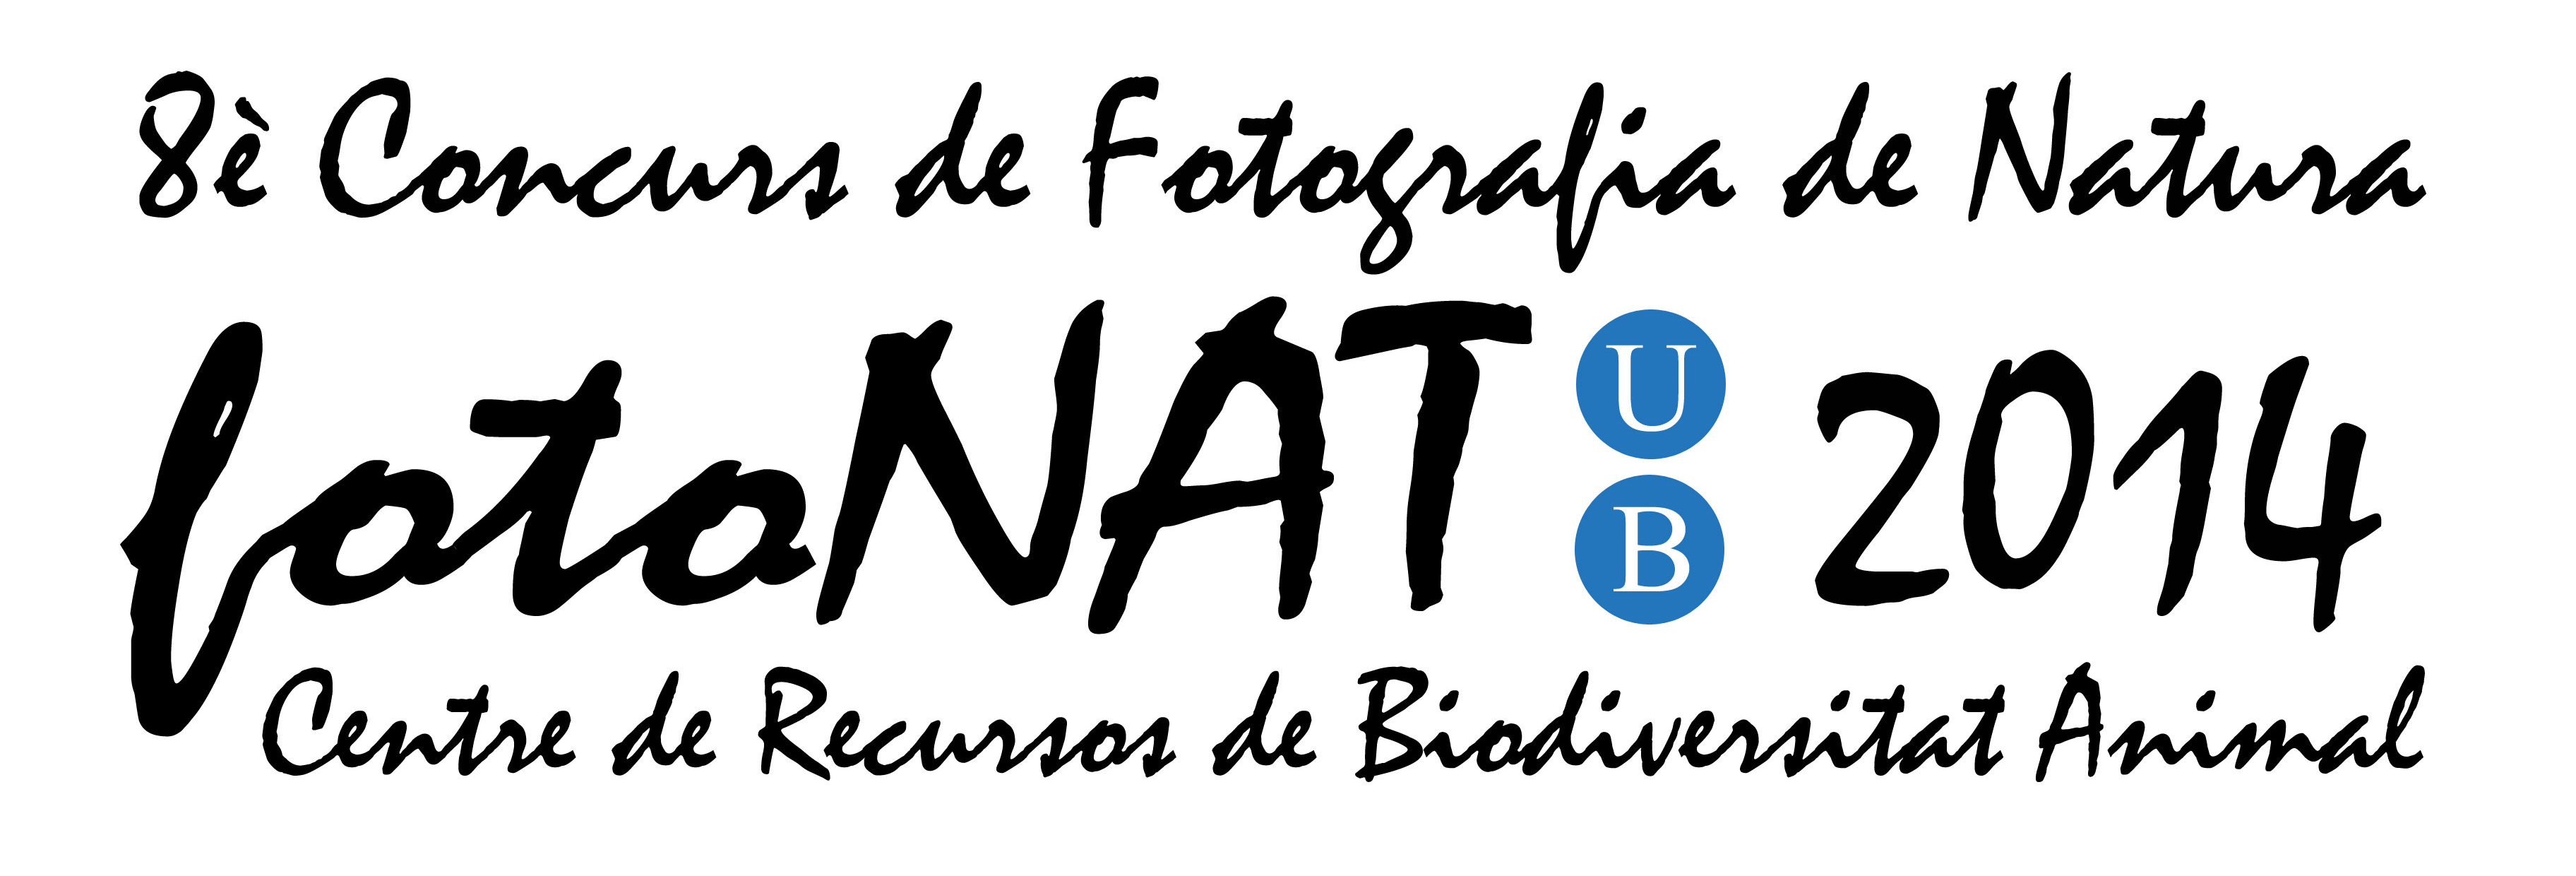 fotoNAT-UB 2014